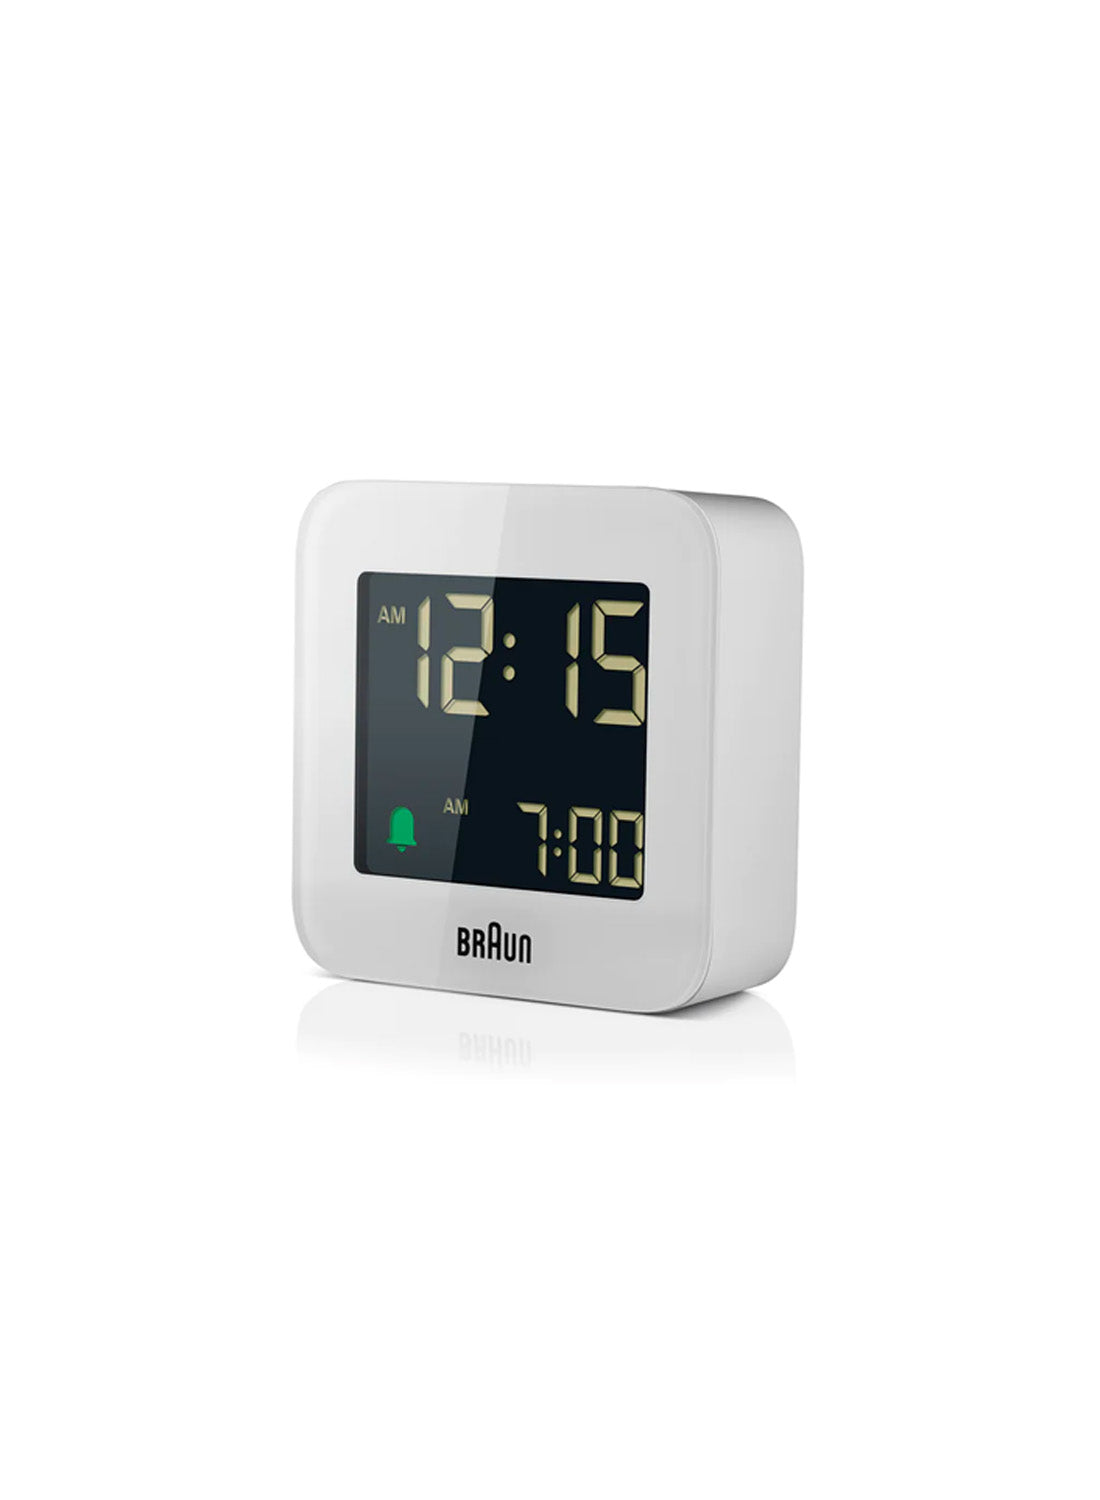 Braun Digital Alarm Clock BC08 - White